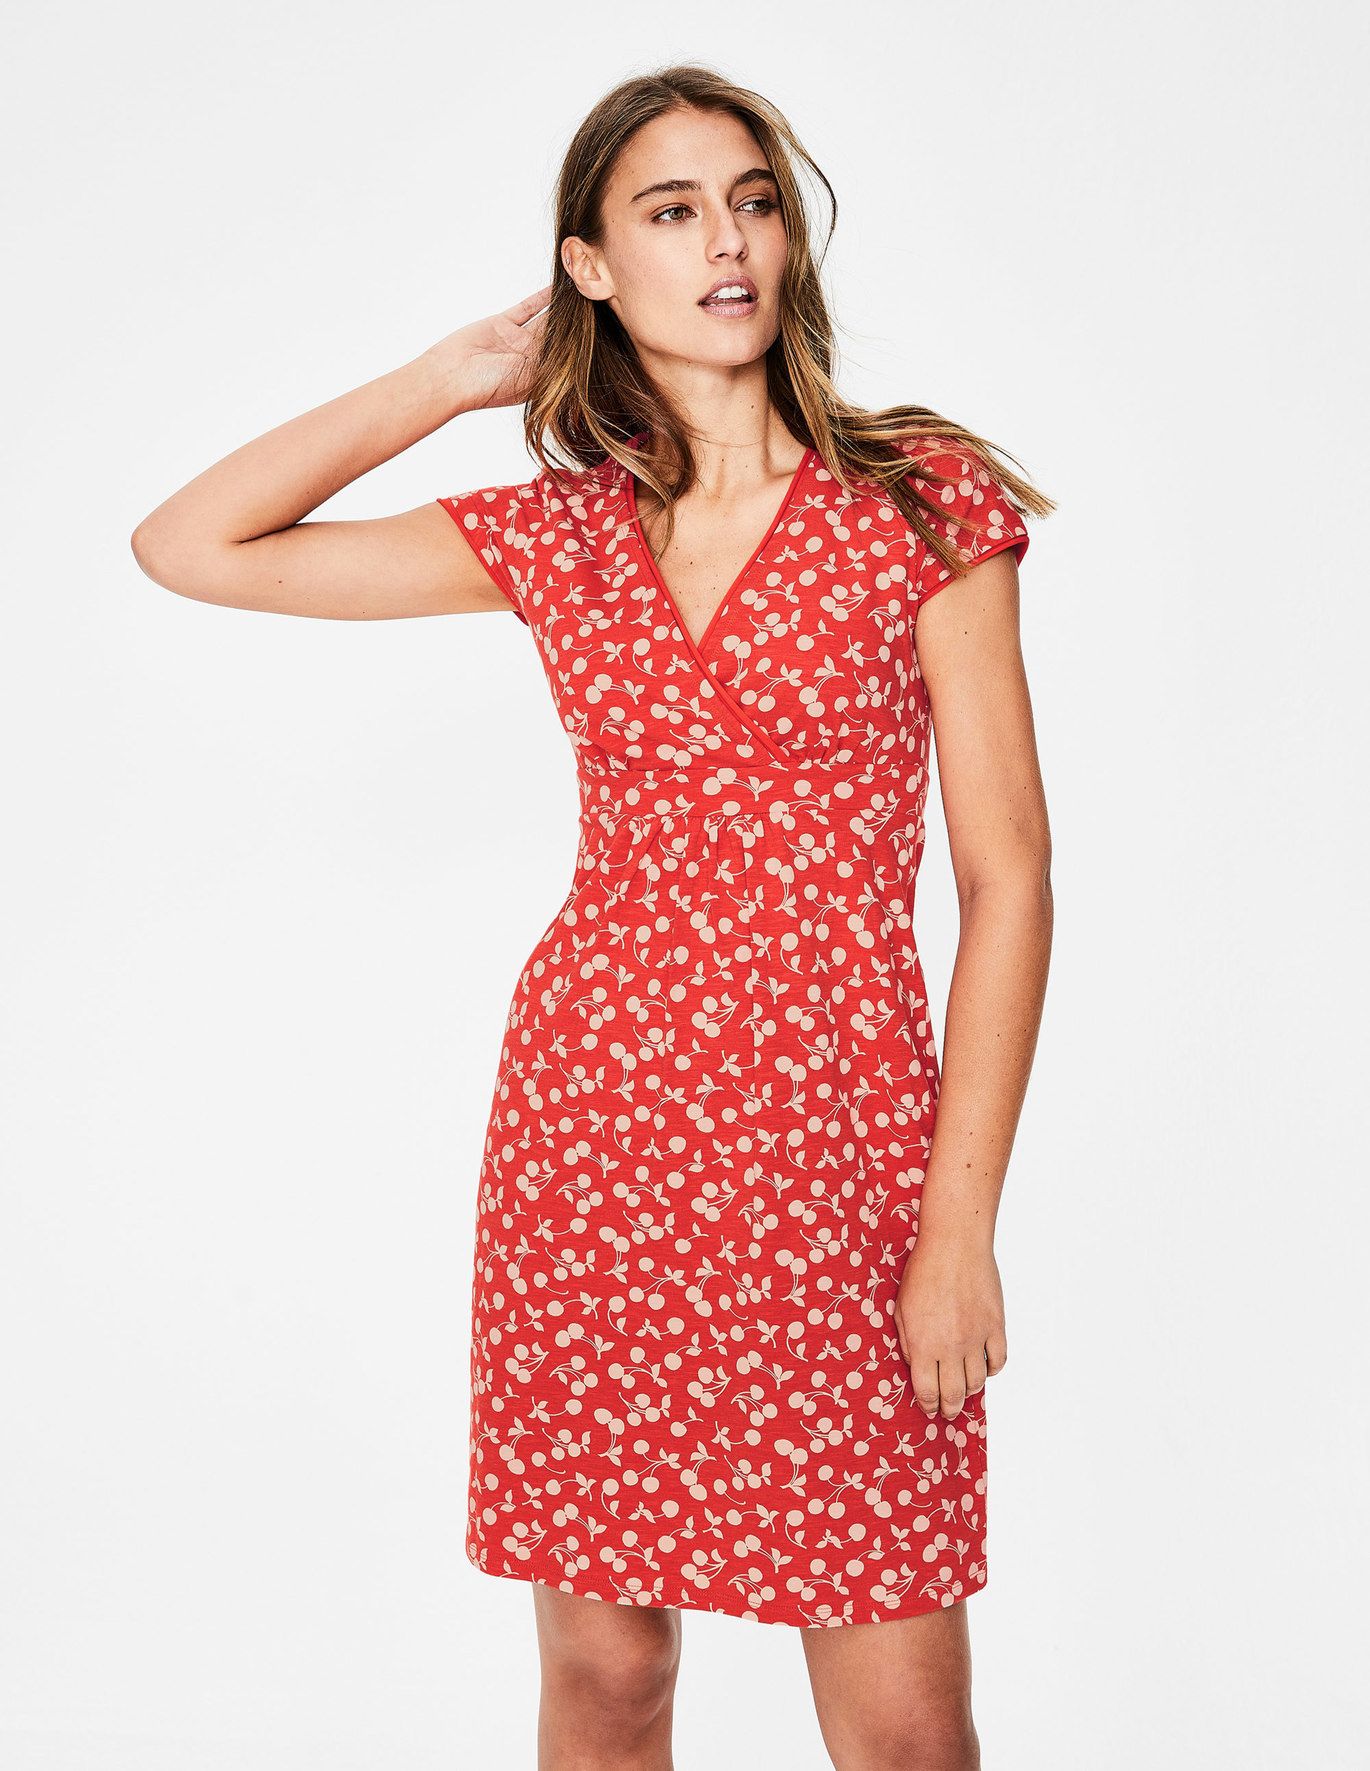 Boden Summer Dress Flash Sales, UP TO ...